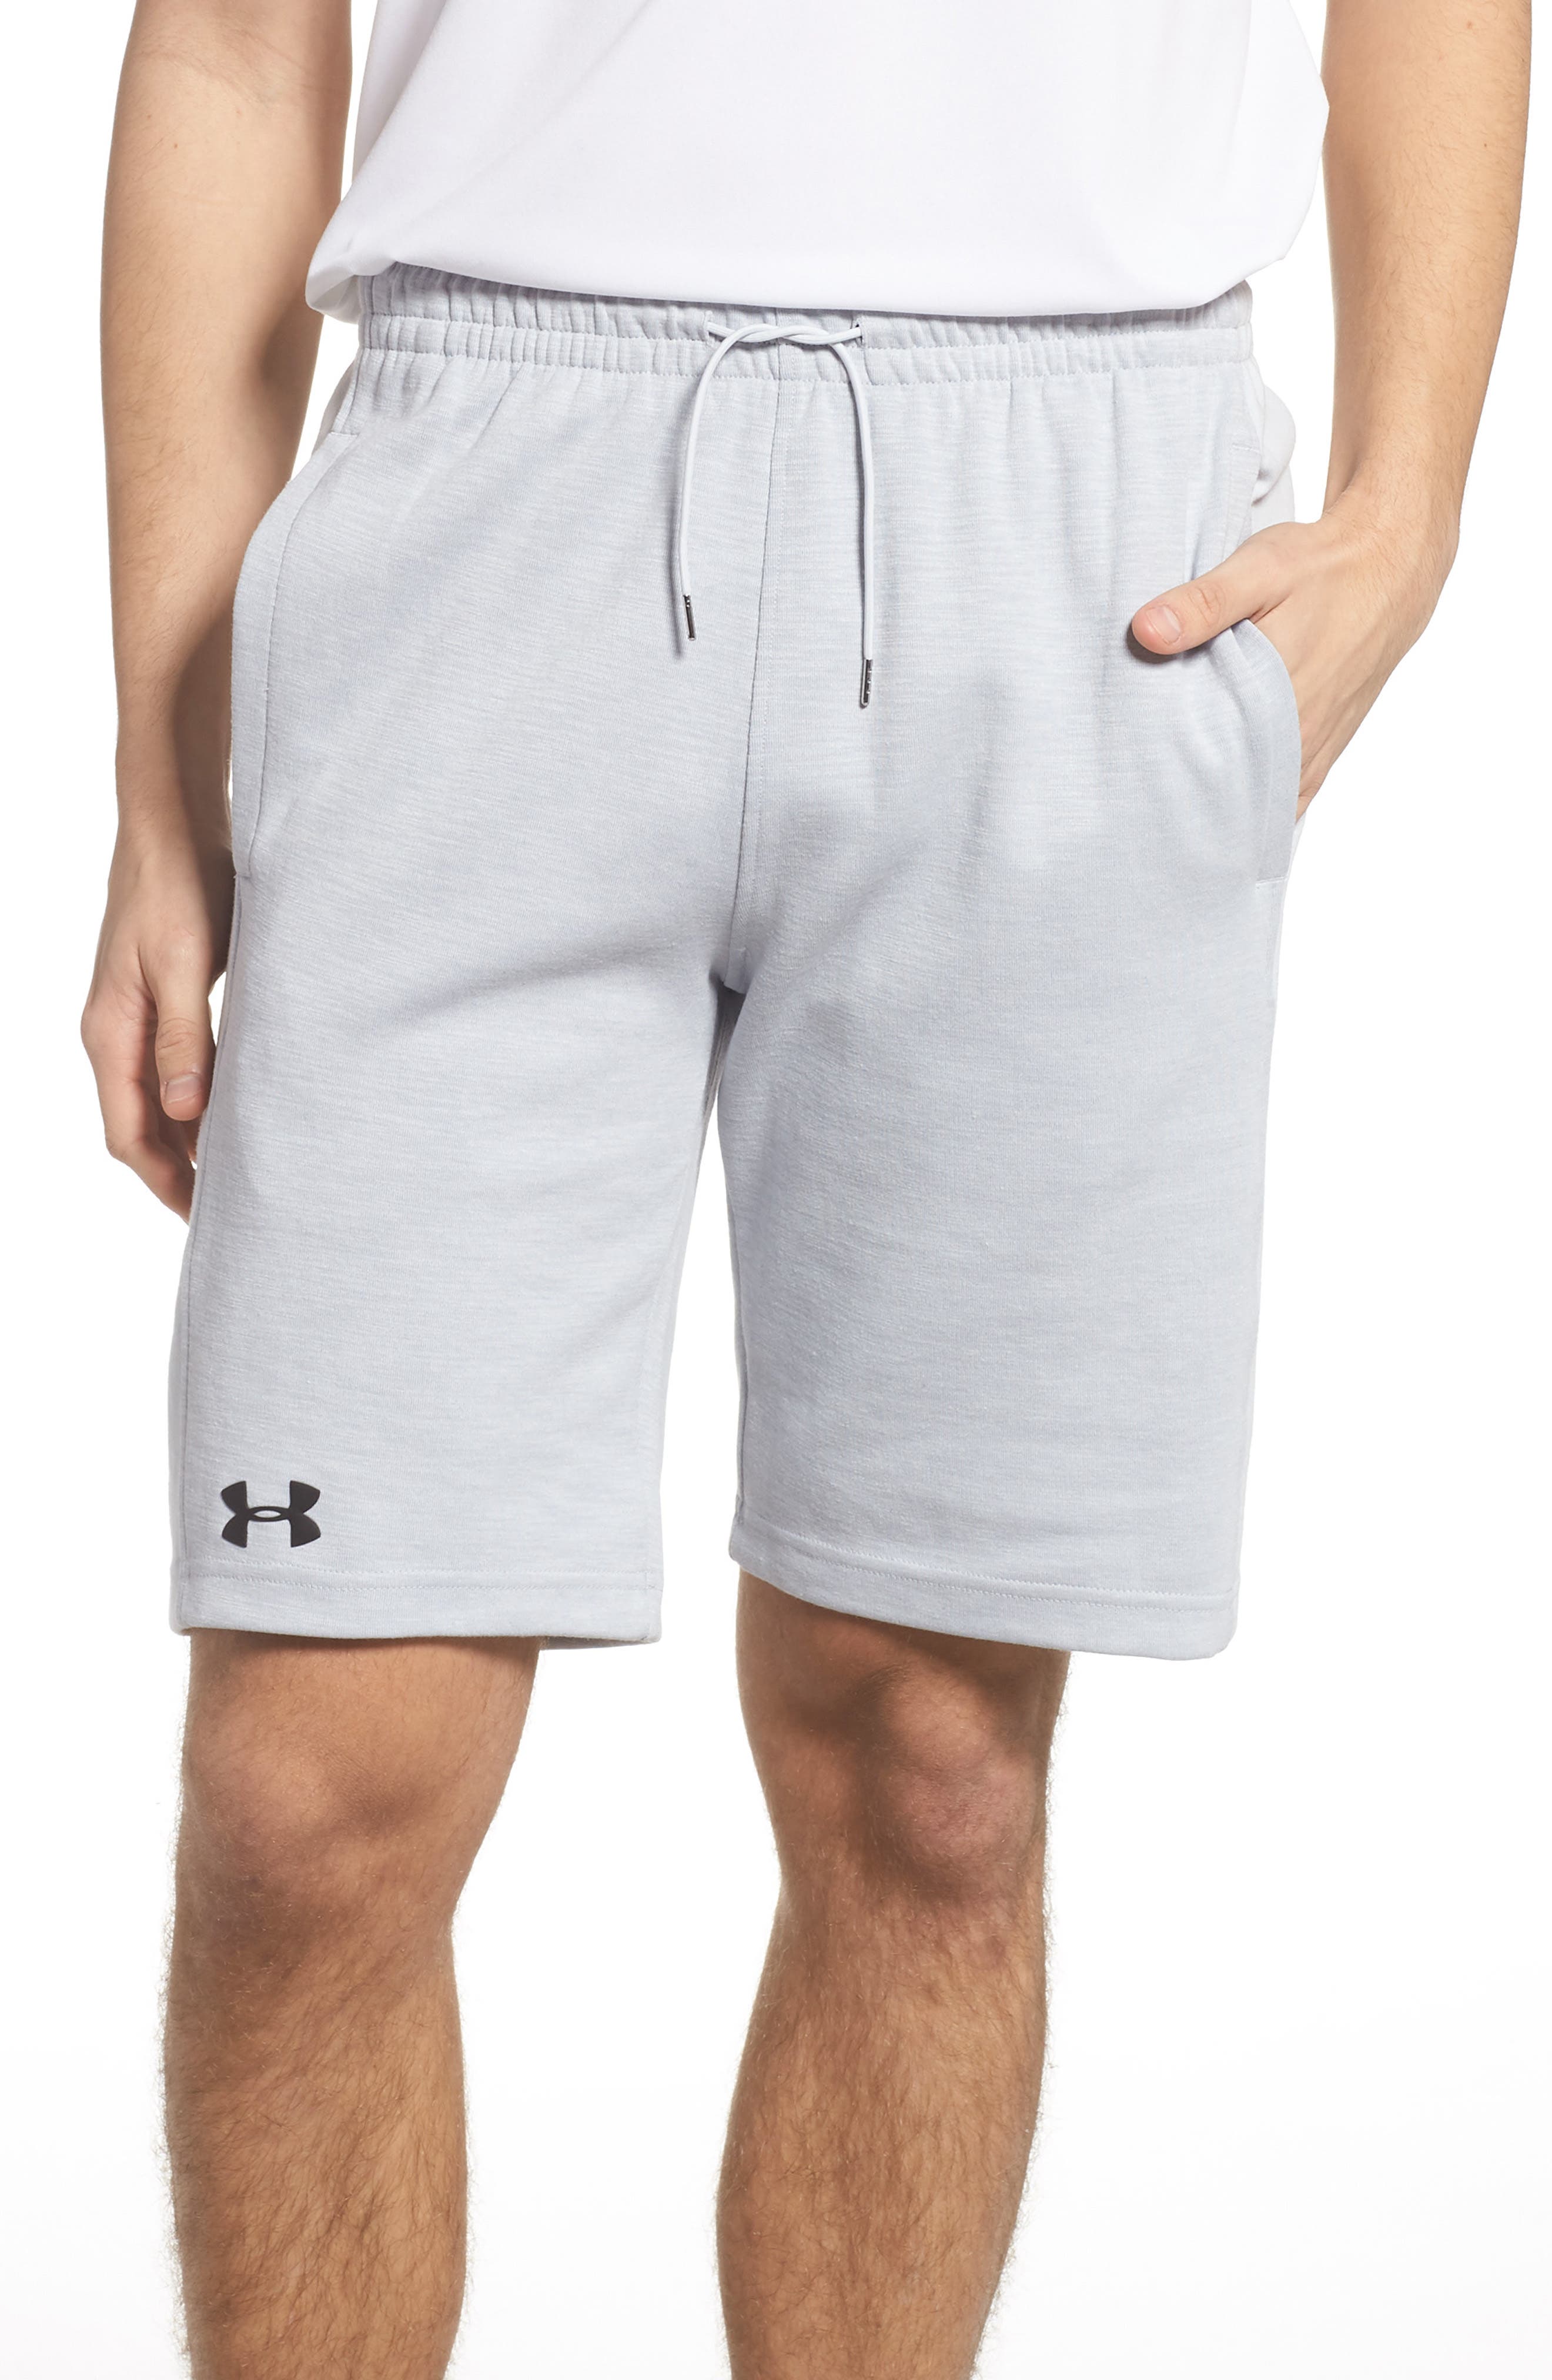 shorts that go under shorts